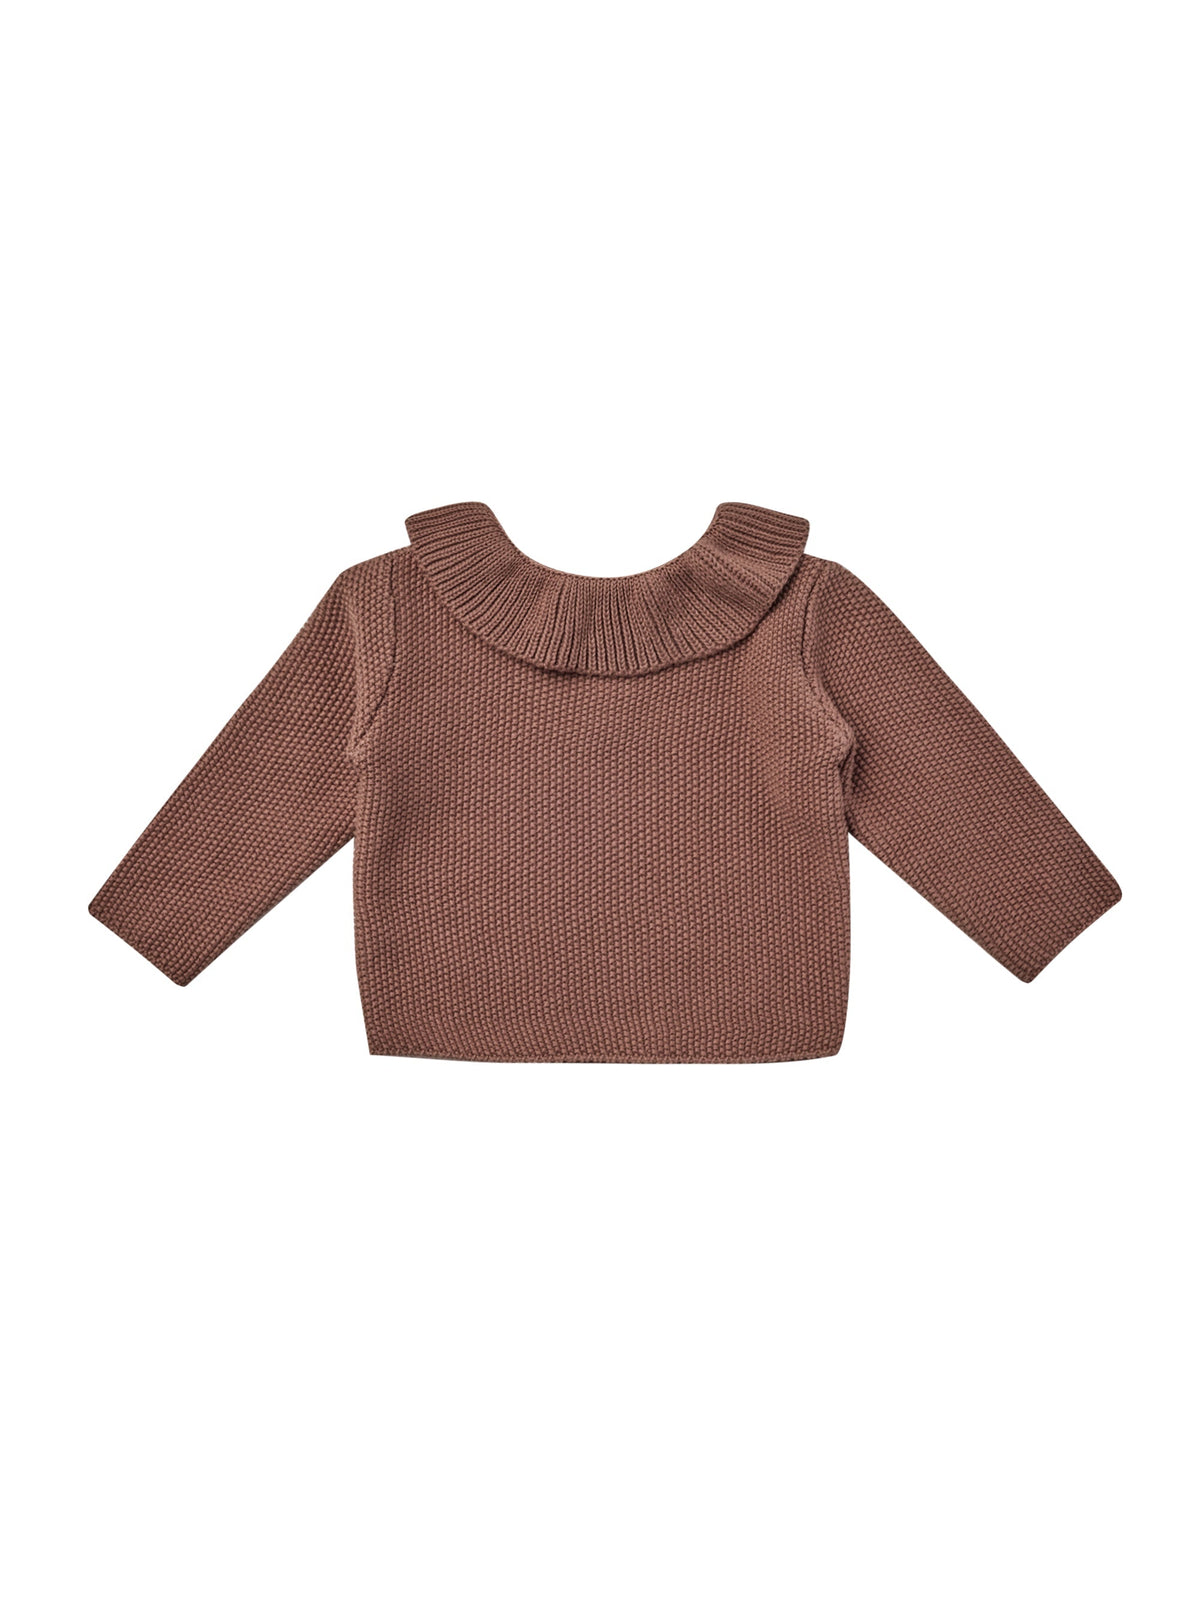 Quincy Mae Ruffle Collar Knit Sweater | Pecan